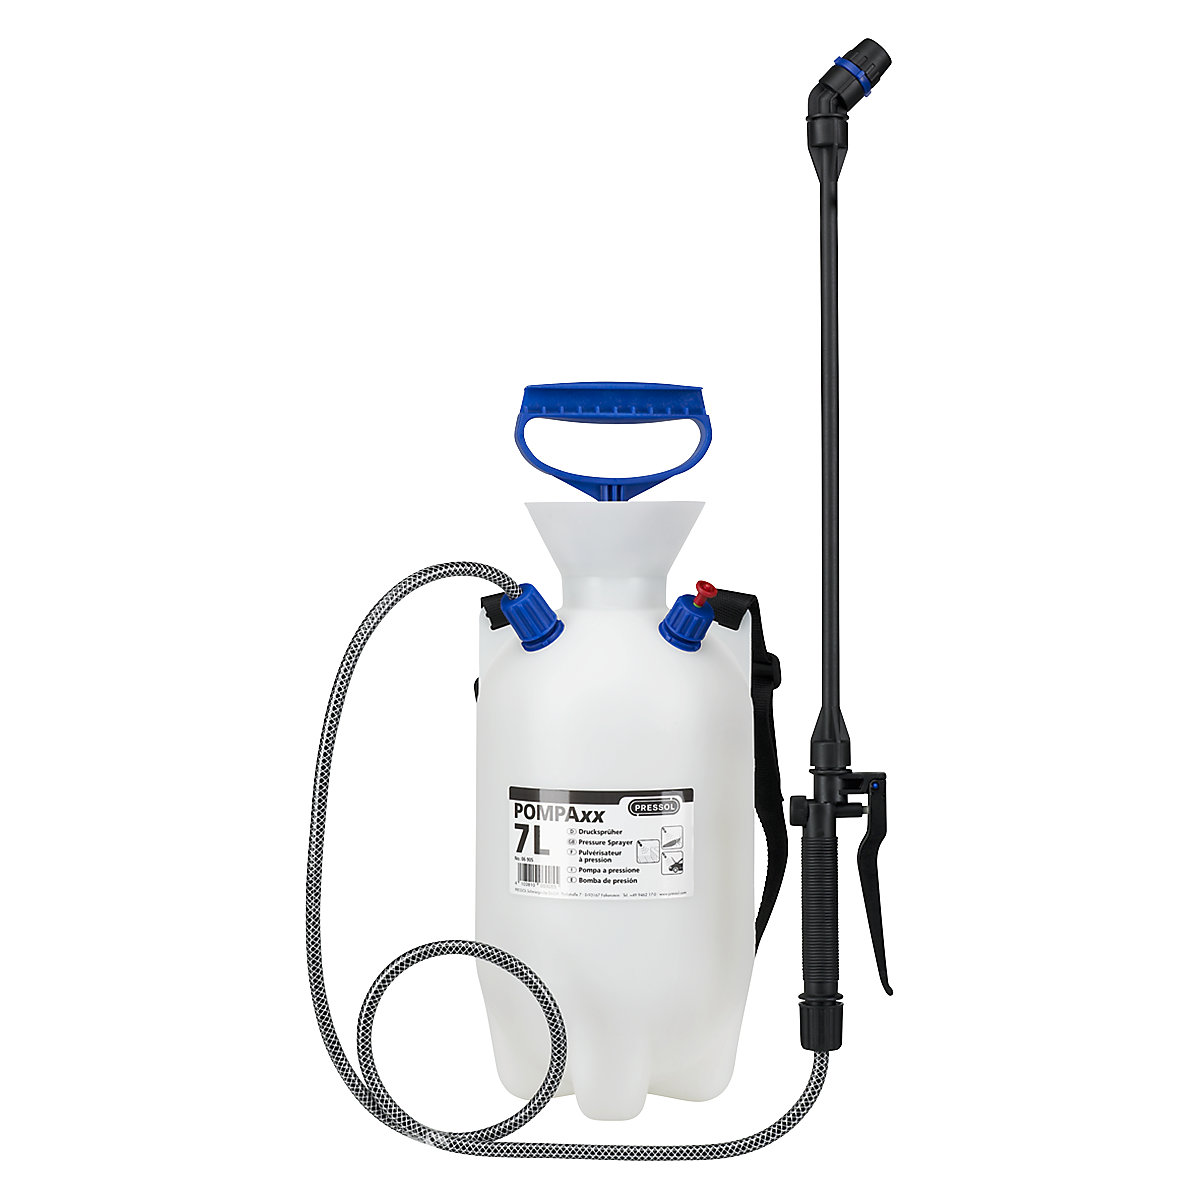 Industrial pressure sprayer - PRESSOL